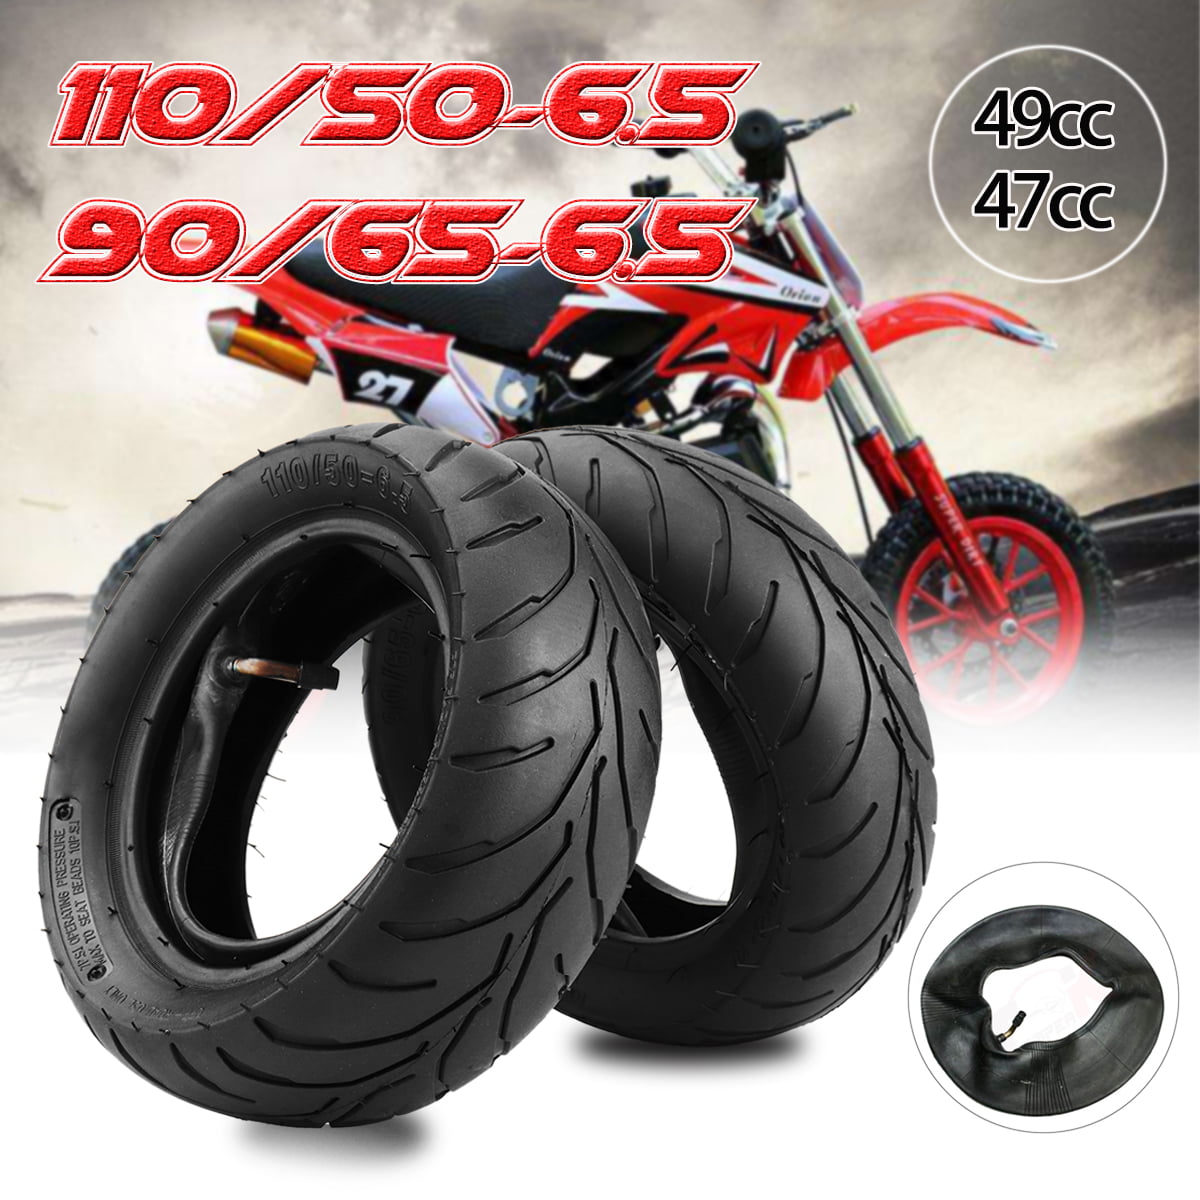 Inner Tire Tube 110/50/6.5 90/65/6.5 Wheel 49cc Mini Pocket Motorbikes 